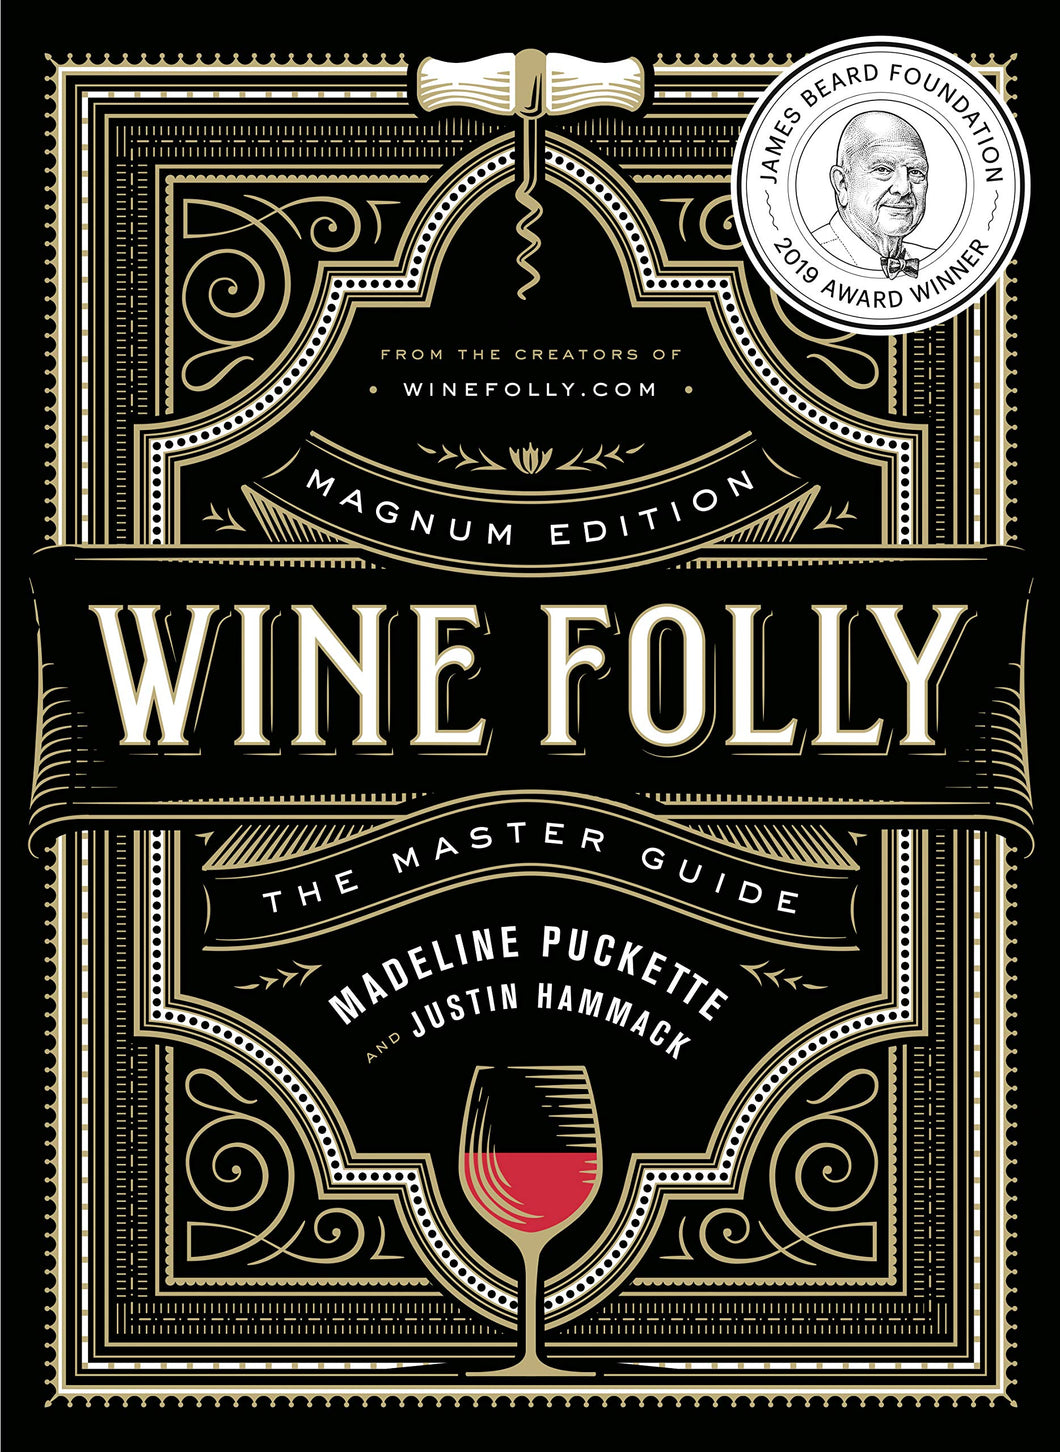 Wine Folly : Magnum Edition